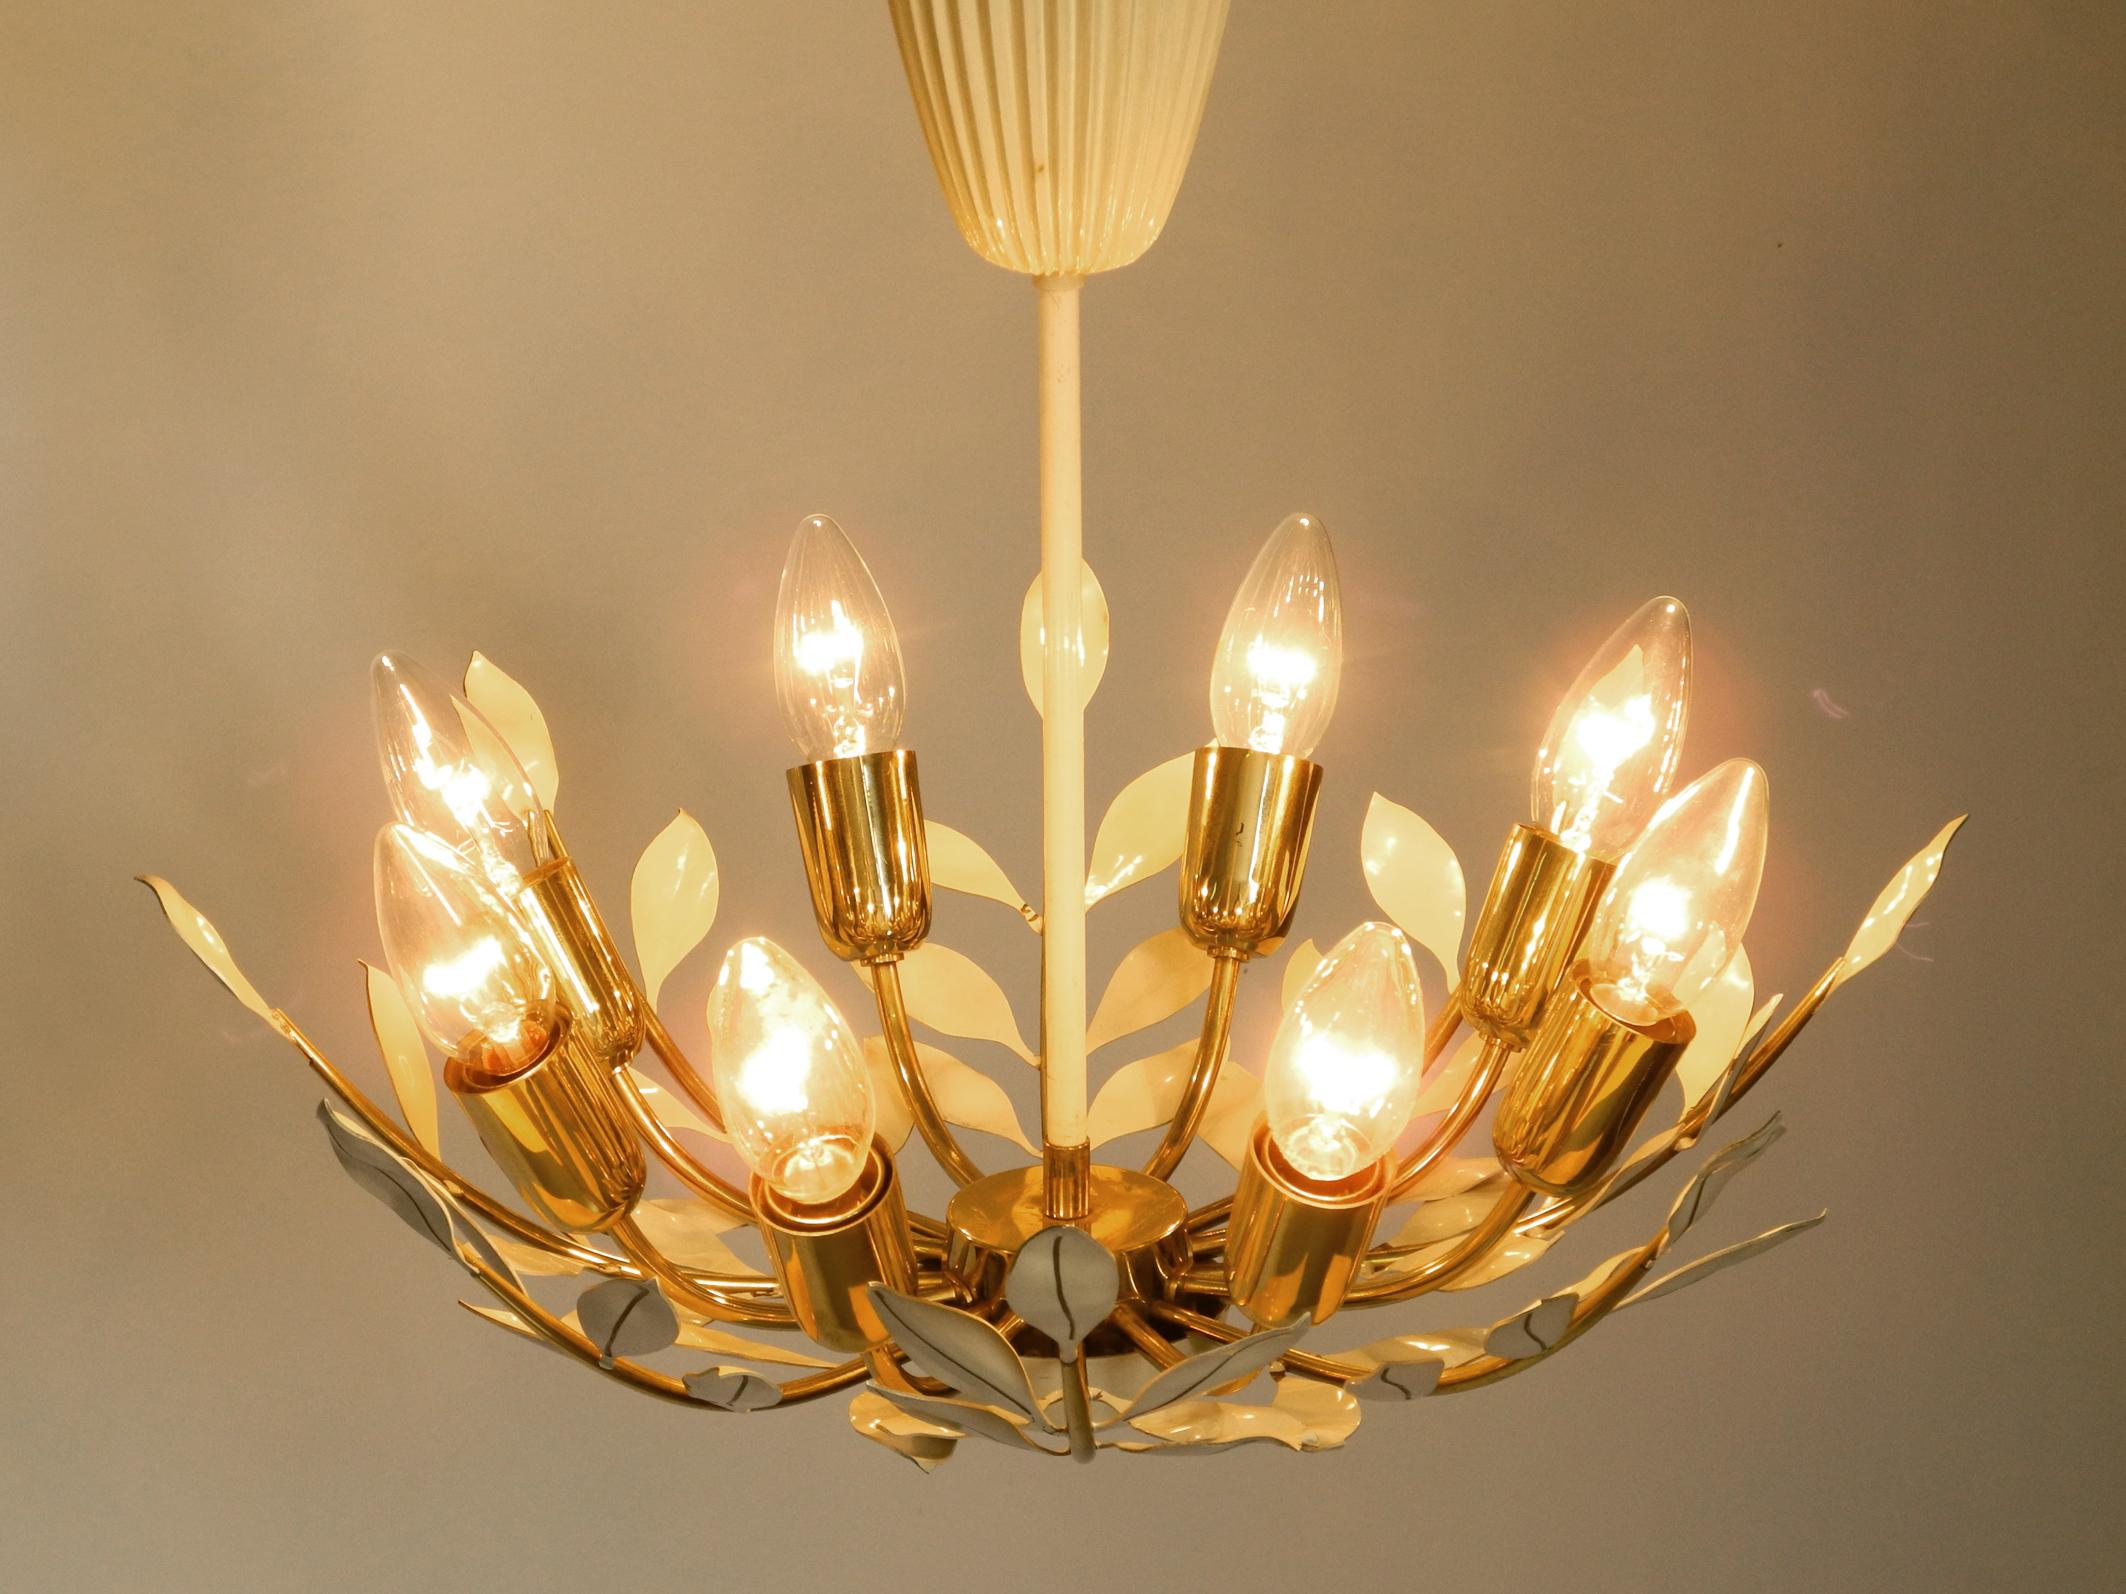 Small 1950s brass Sputnik ceiling lamp with 8 arms by Vereinigte Werkstätten In Good Condition For Sale In München, DE